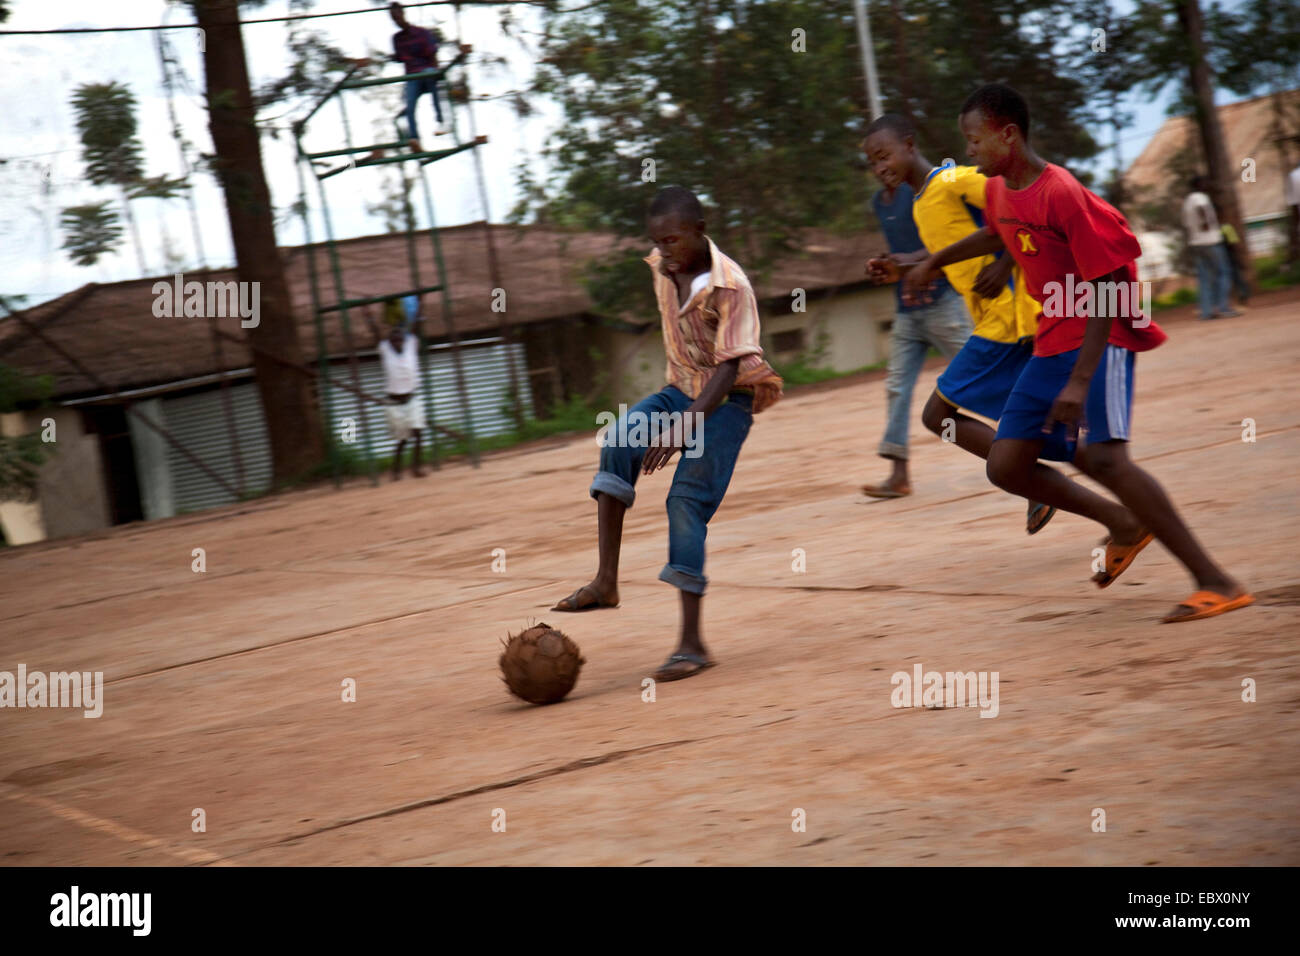 Adolescents playing soccer - football on a concrete area, Rwanda, Nyamirambo, Kigali Stock Photo